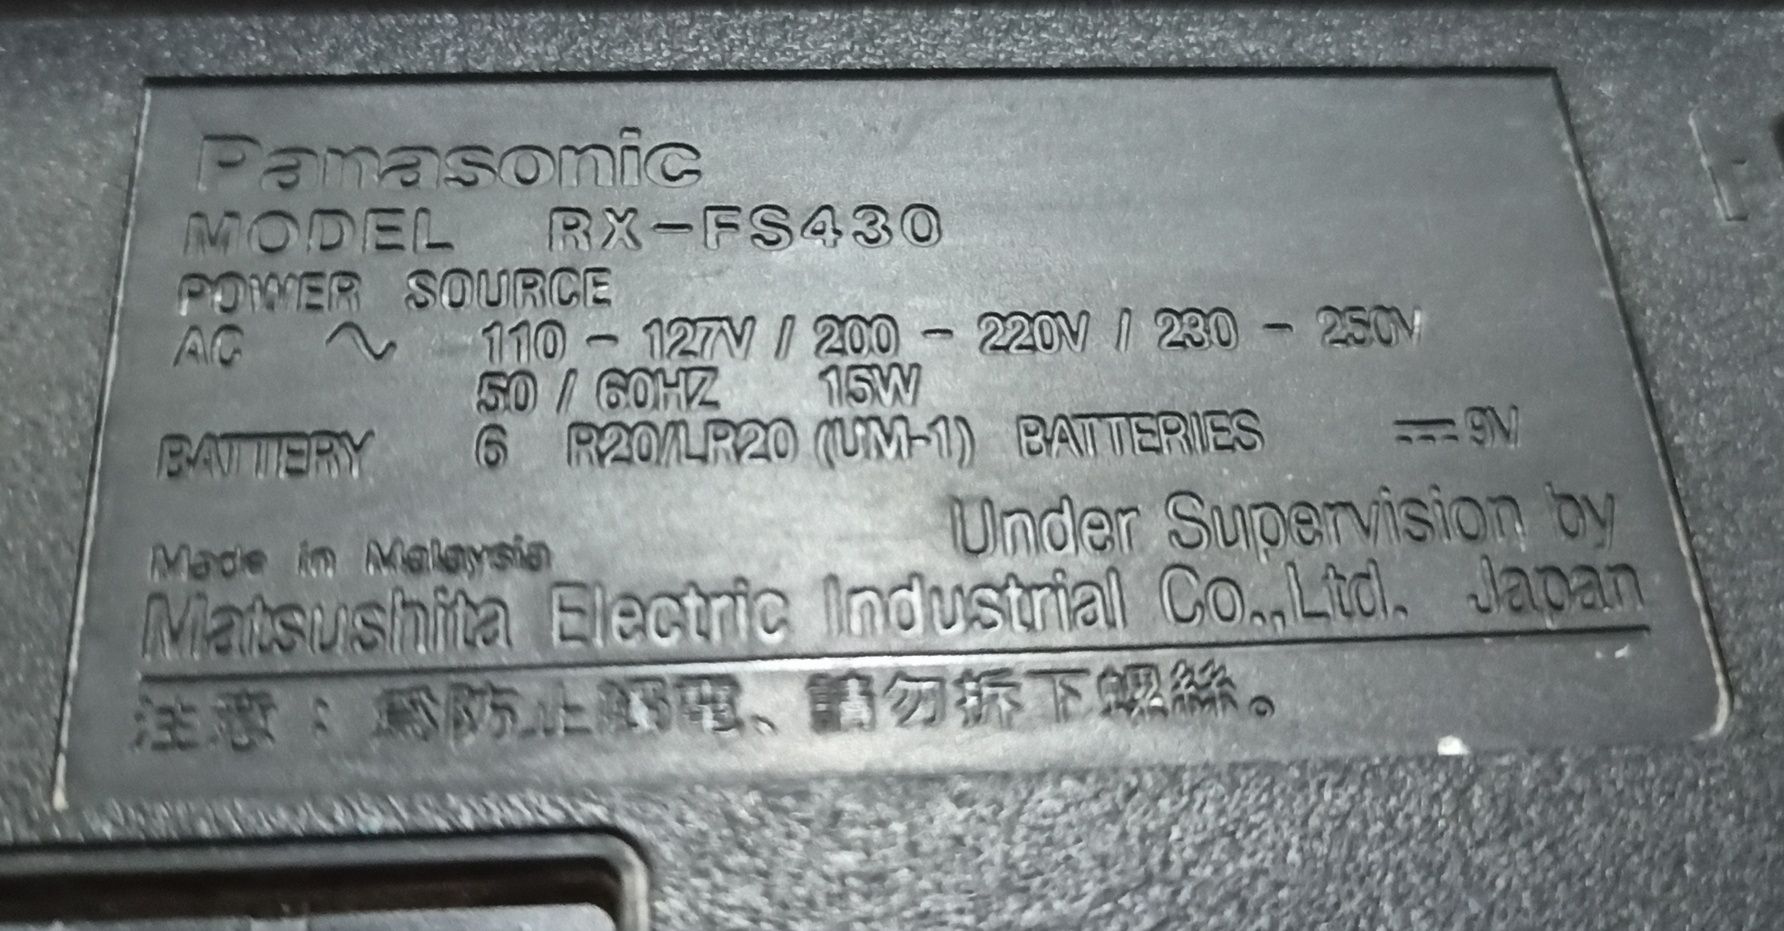 Panasonic RX-FS430.